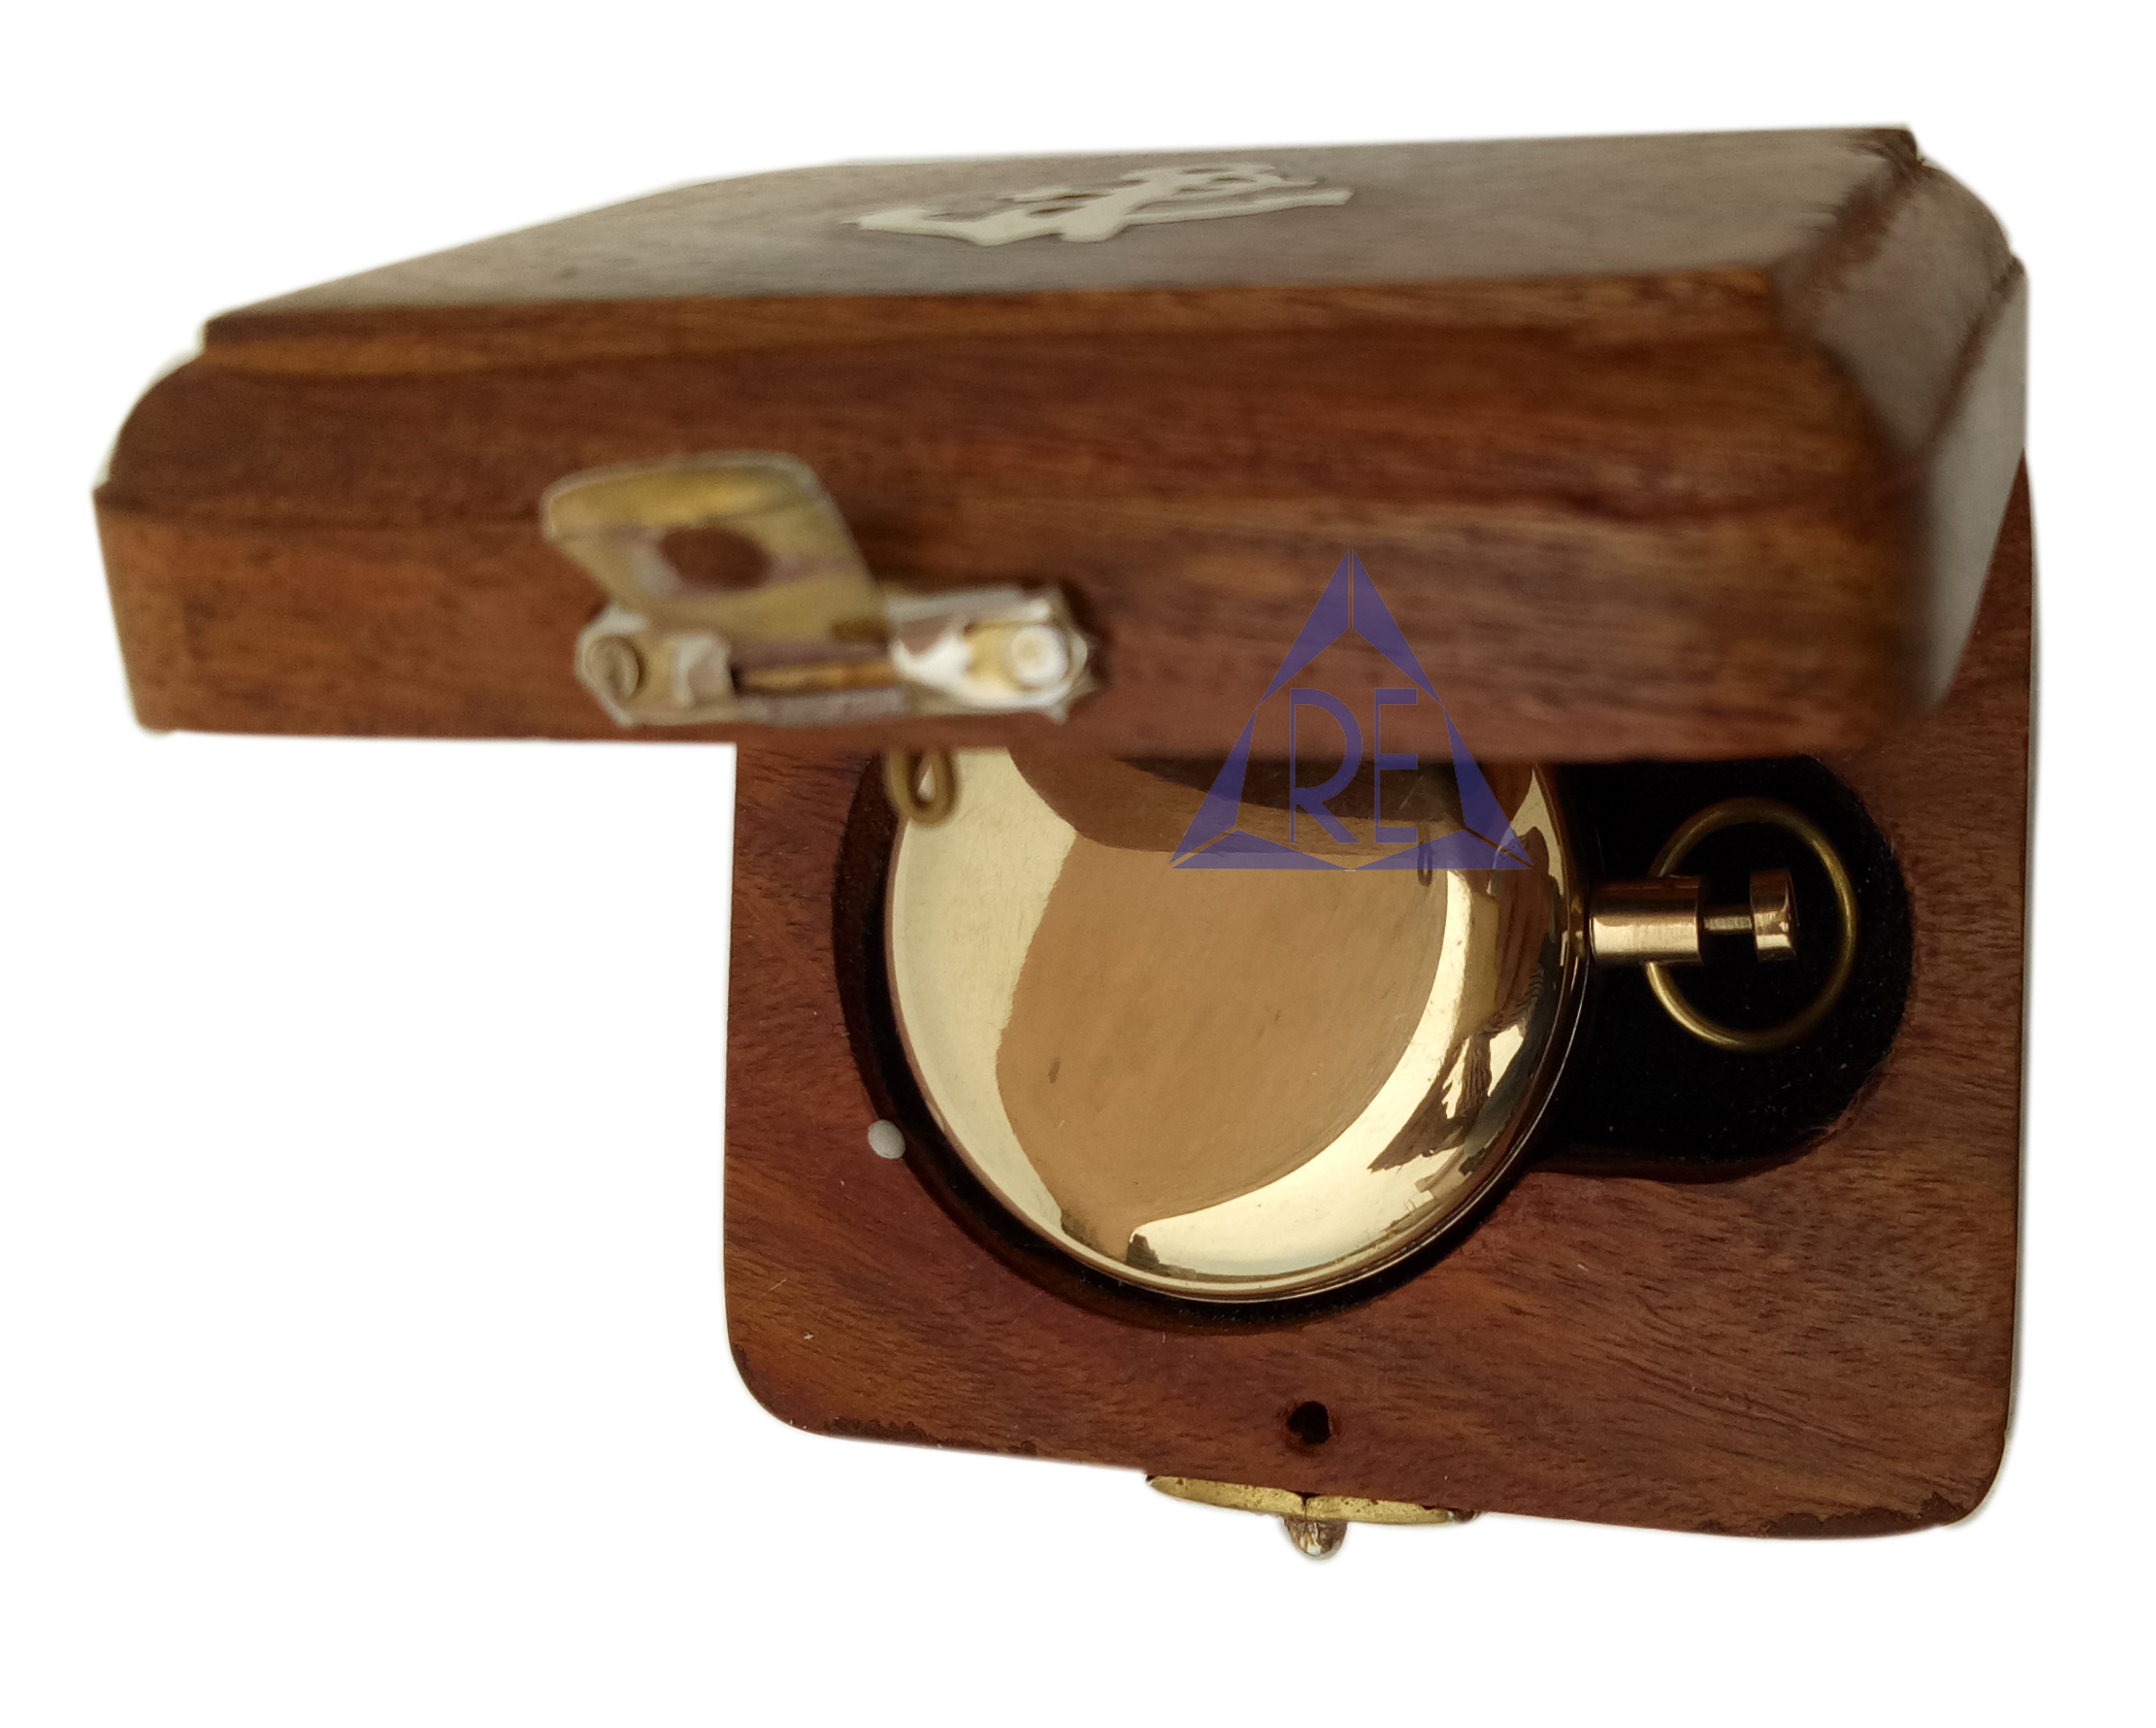 Nickel Plated Push Button Brass Pocket Compass Brass Push Button Compass Collectible Maritime Pocket Compass